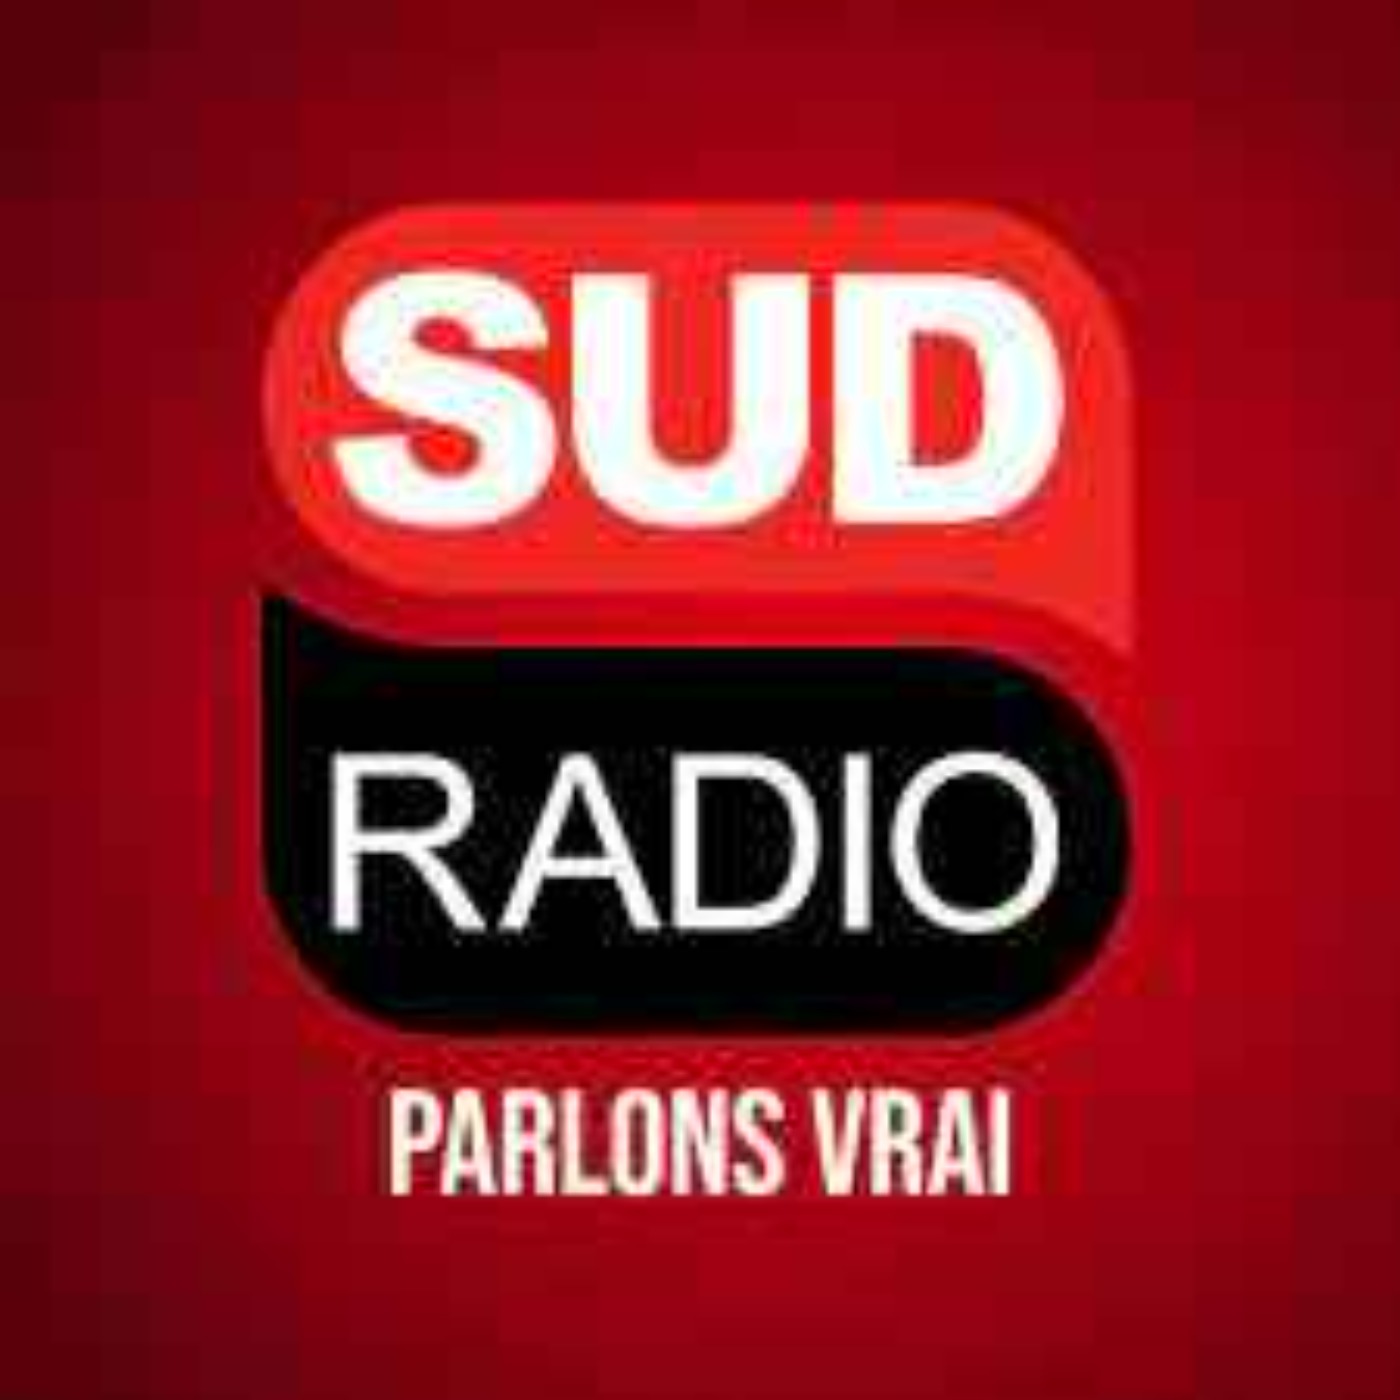 Sud Radio : France / Maroc : le grand revirement